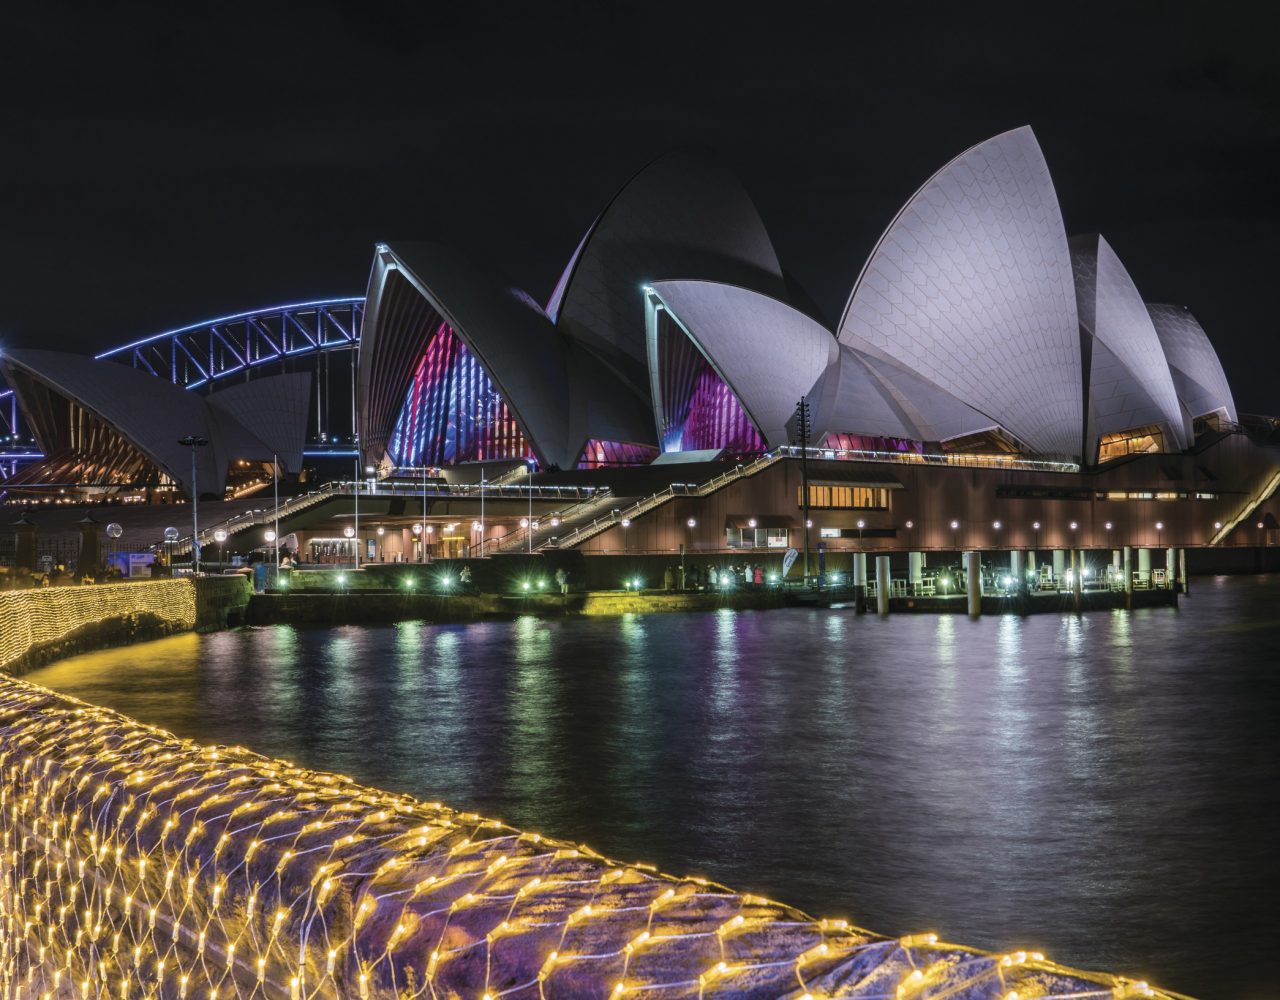 Sydney Opera House and the Sydney Harbour Bridge as viewed from The Royal Botanic Garden, Vivid Sydney 2016.